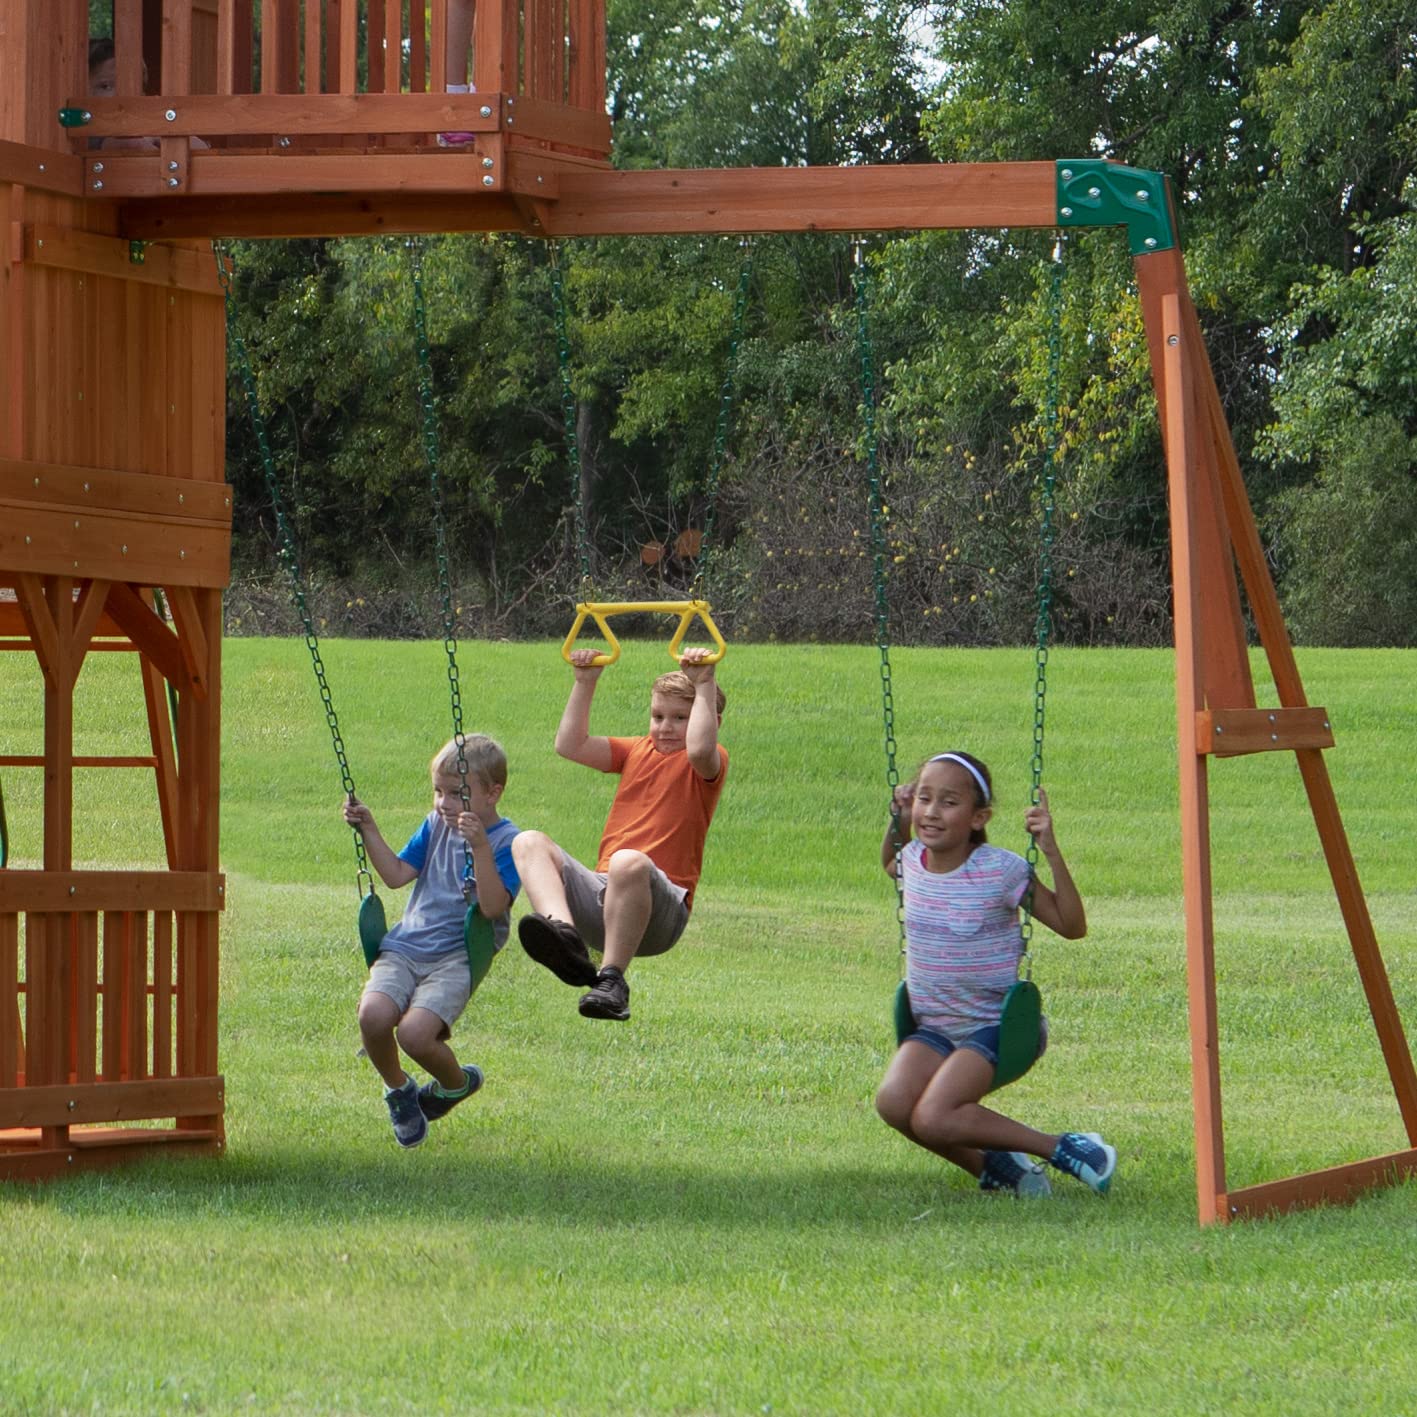 Playground Cedar Wood Swing Set